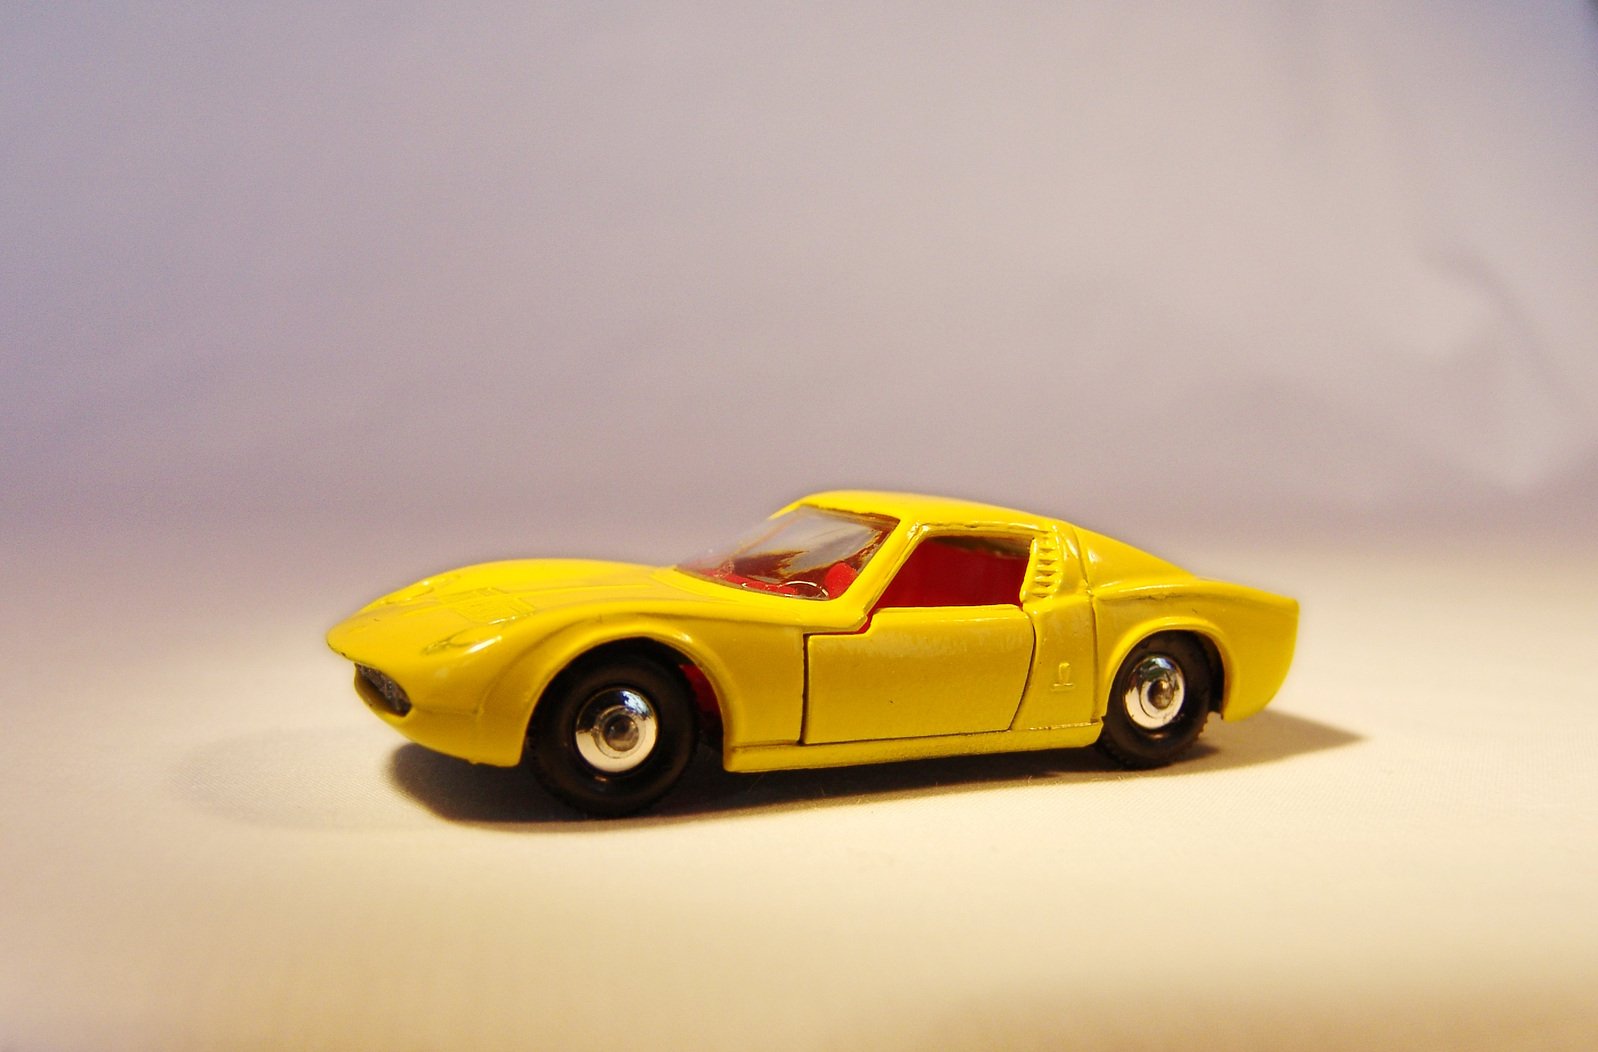 a model yellow sports car, in a studio setting